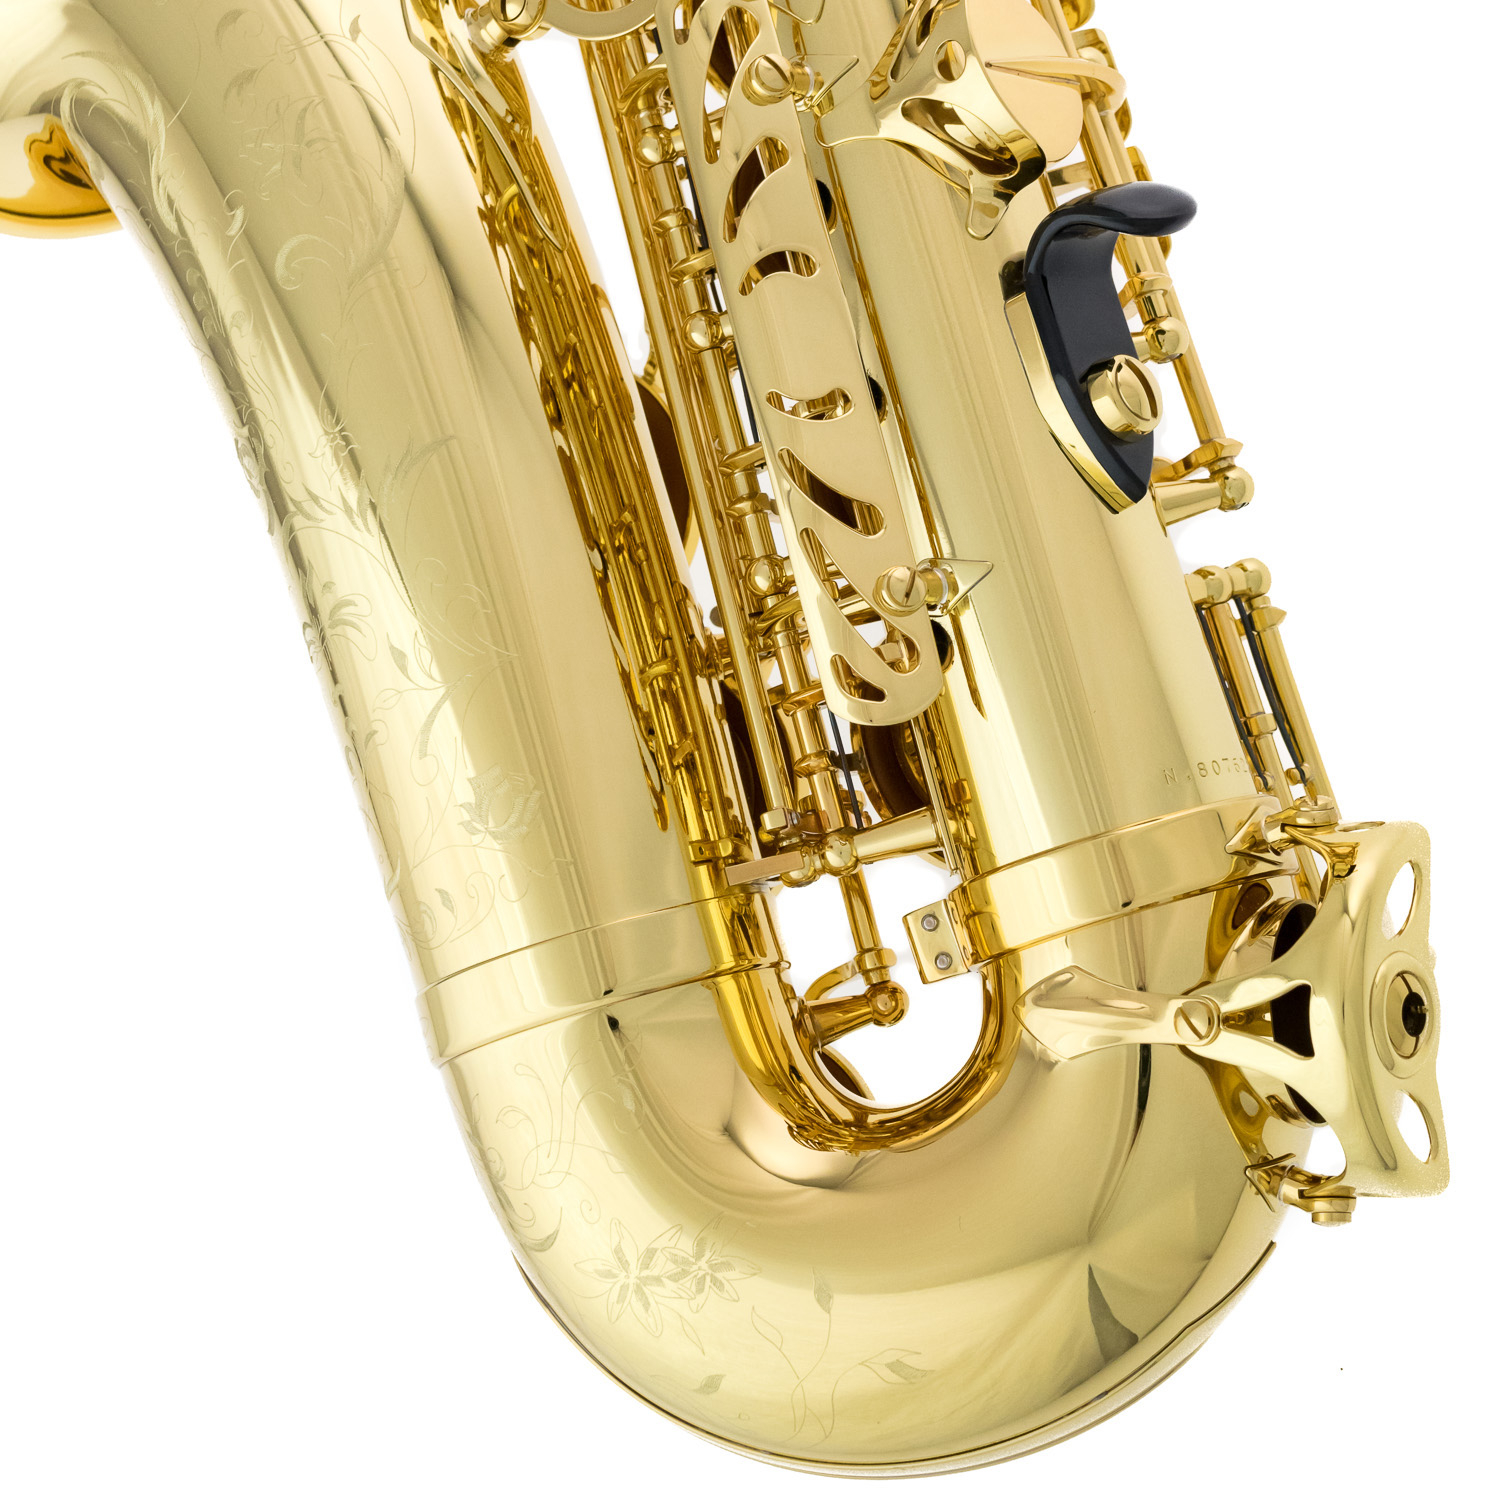 Selmer Altsaxophon - Series II in Goldlack mit Gravur